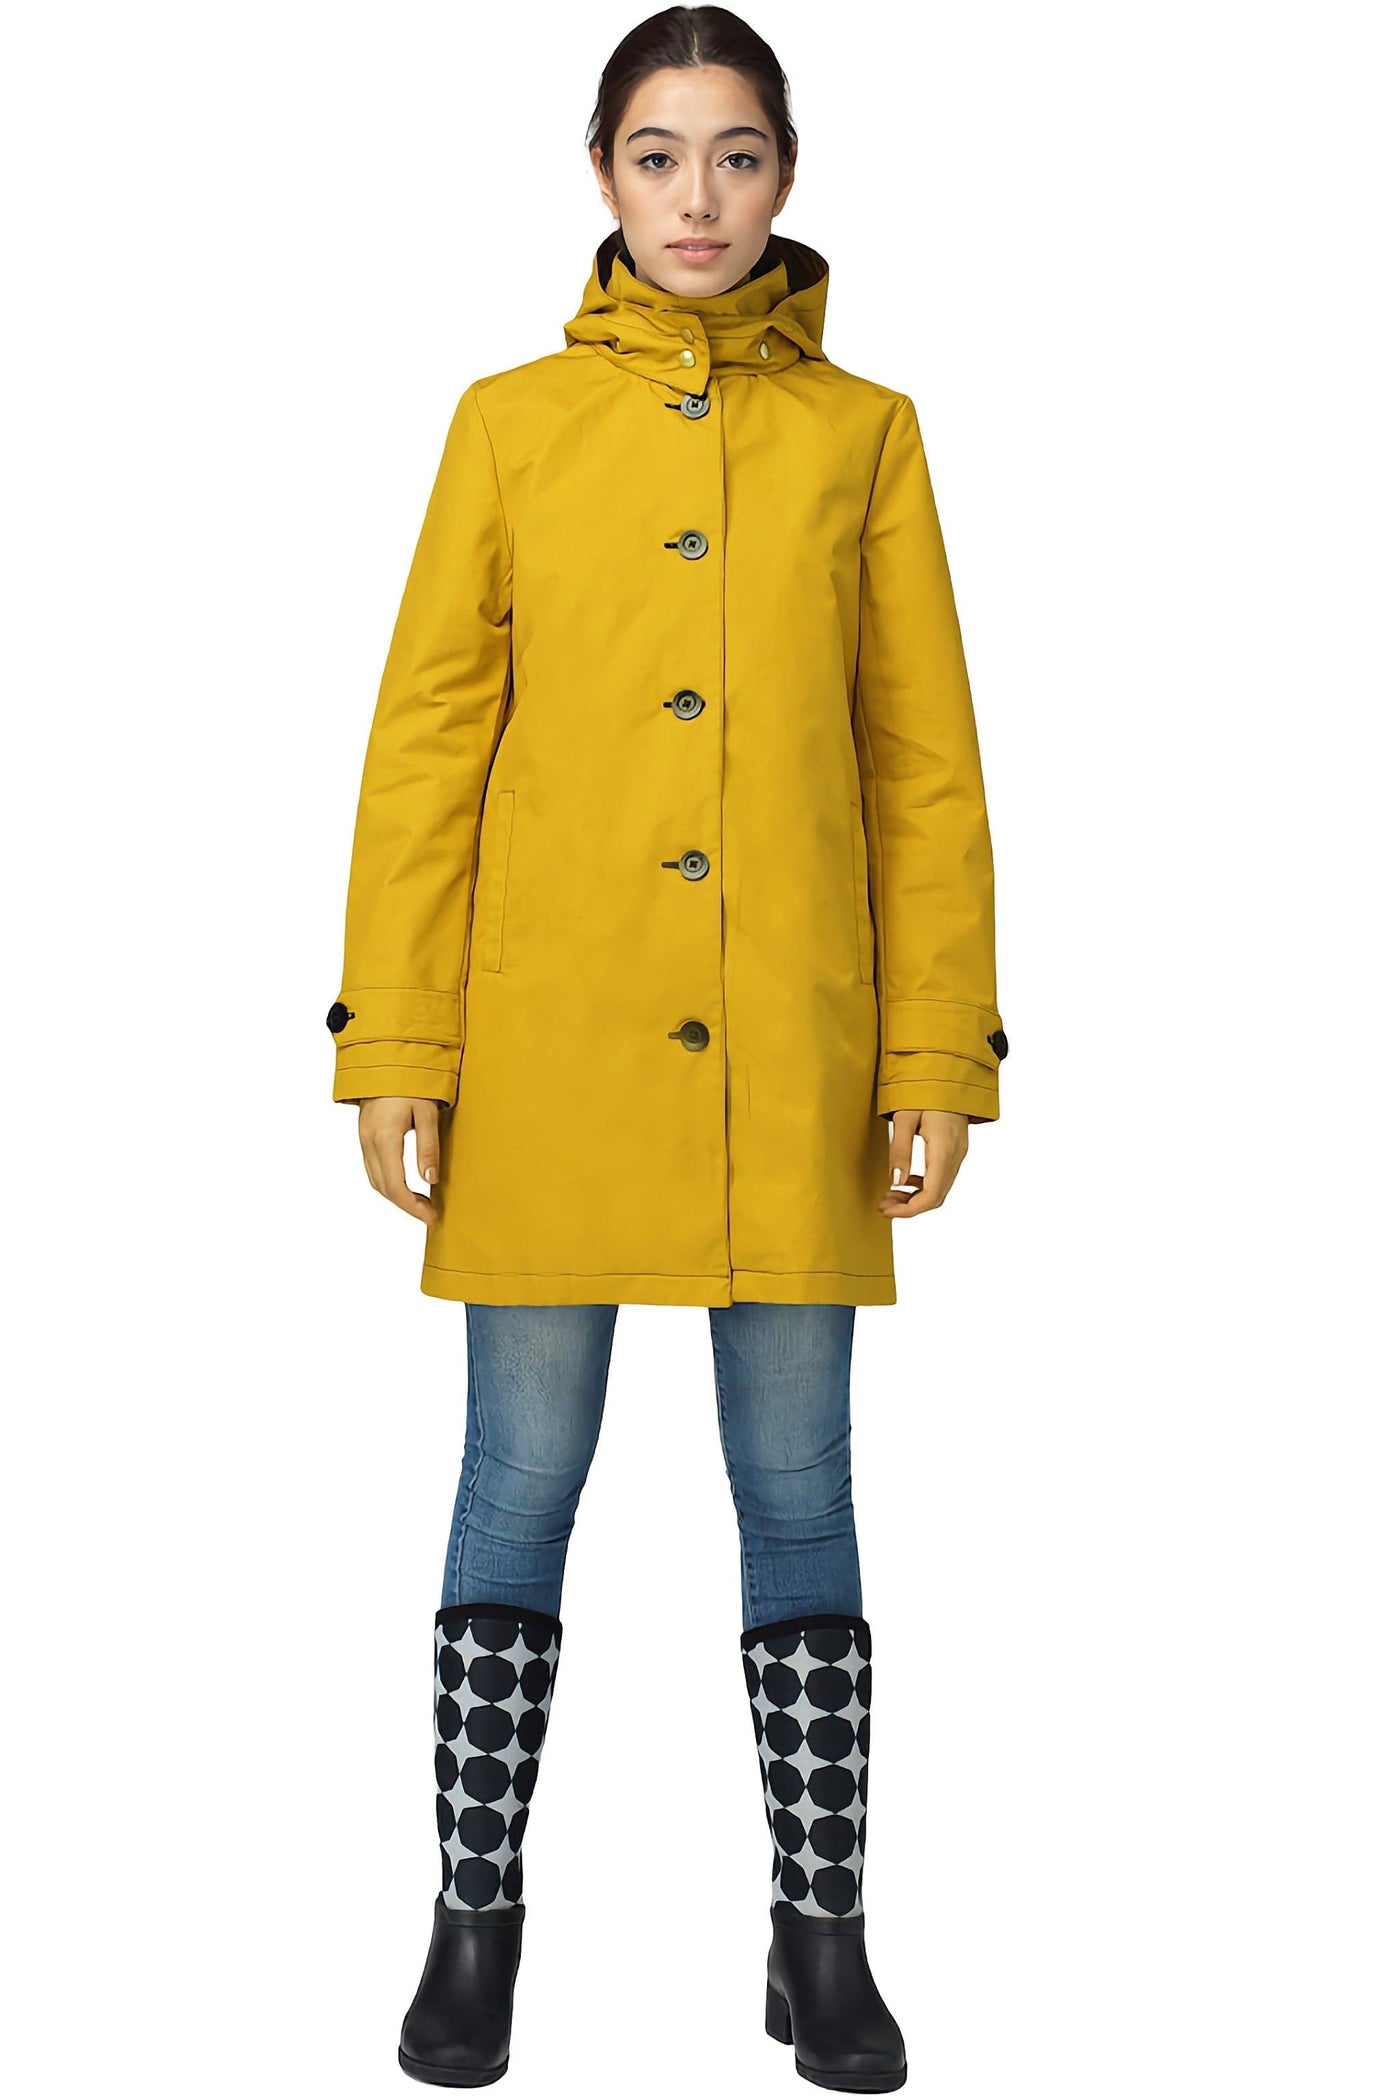 FELLER Outerwear Yellow / XS Queen Anne Trench 2